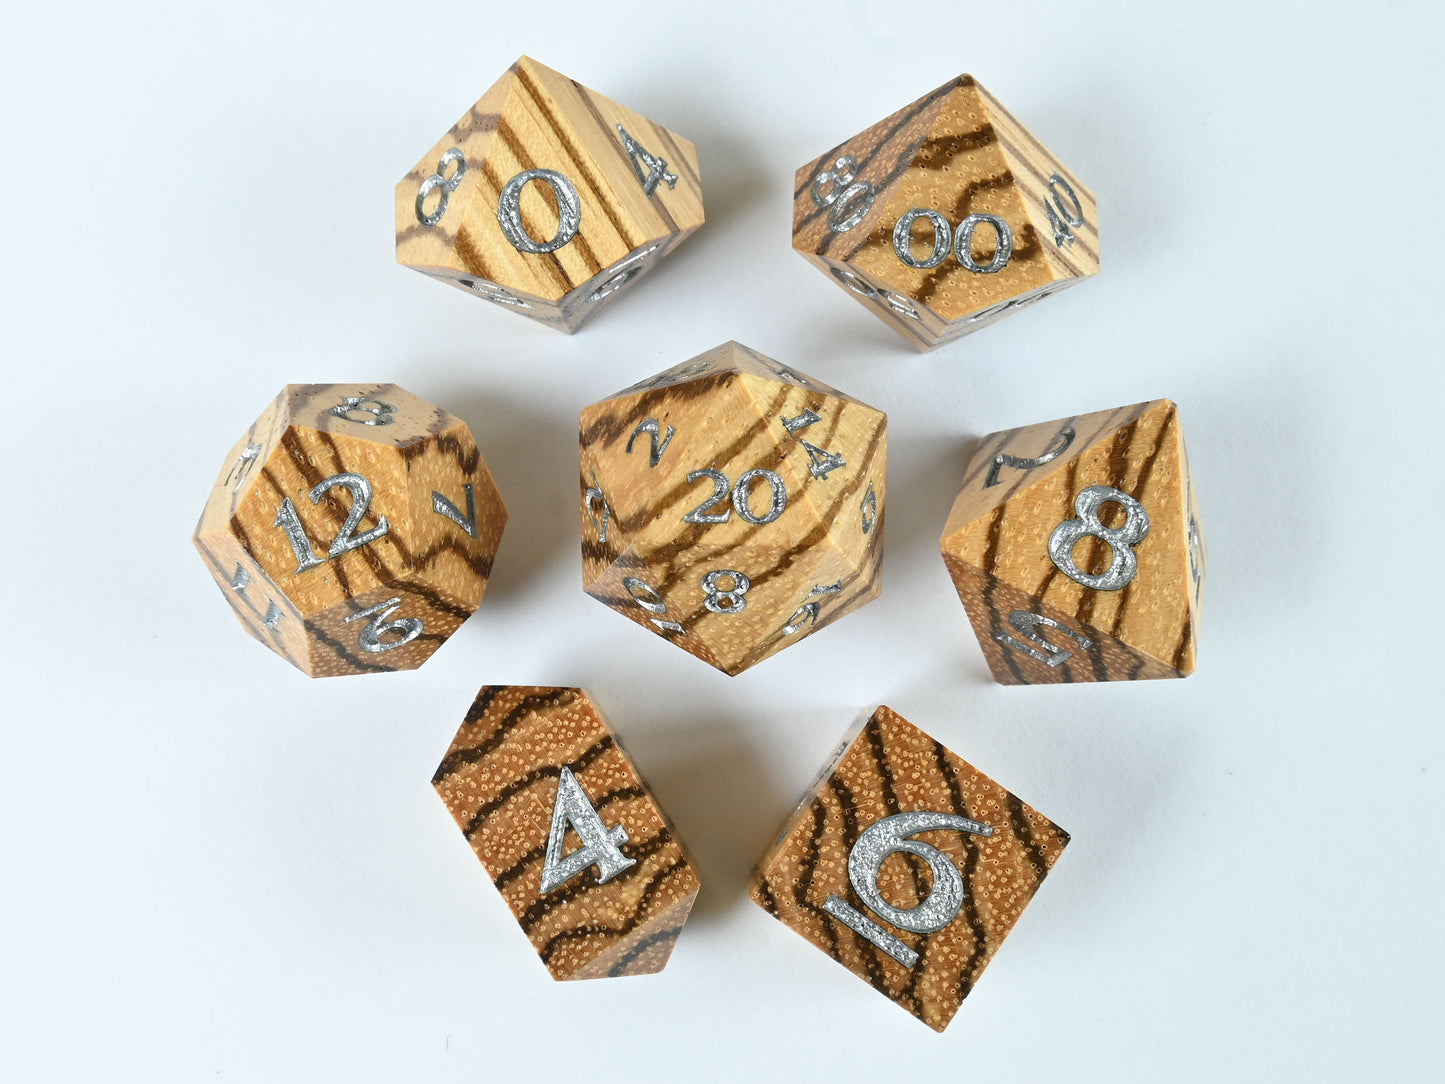 Zebrawood dice set for dnd rpg